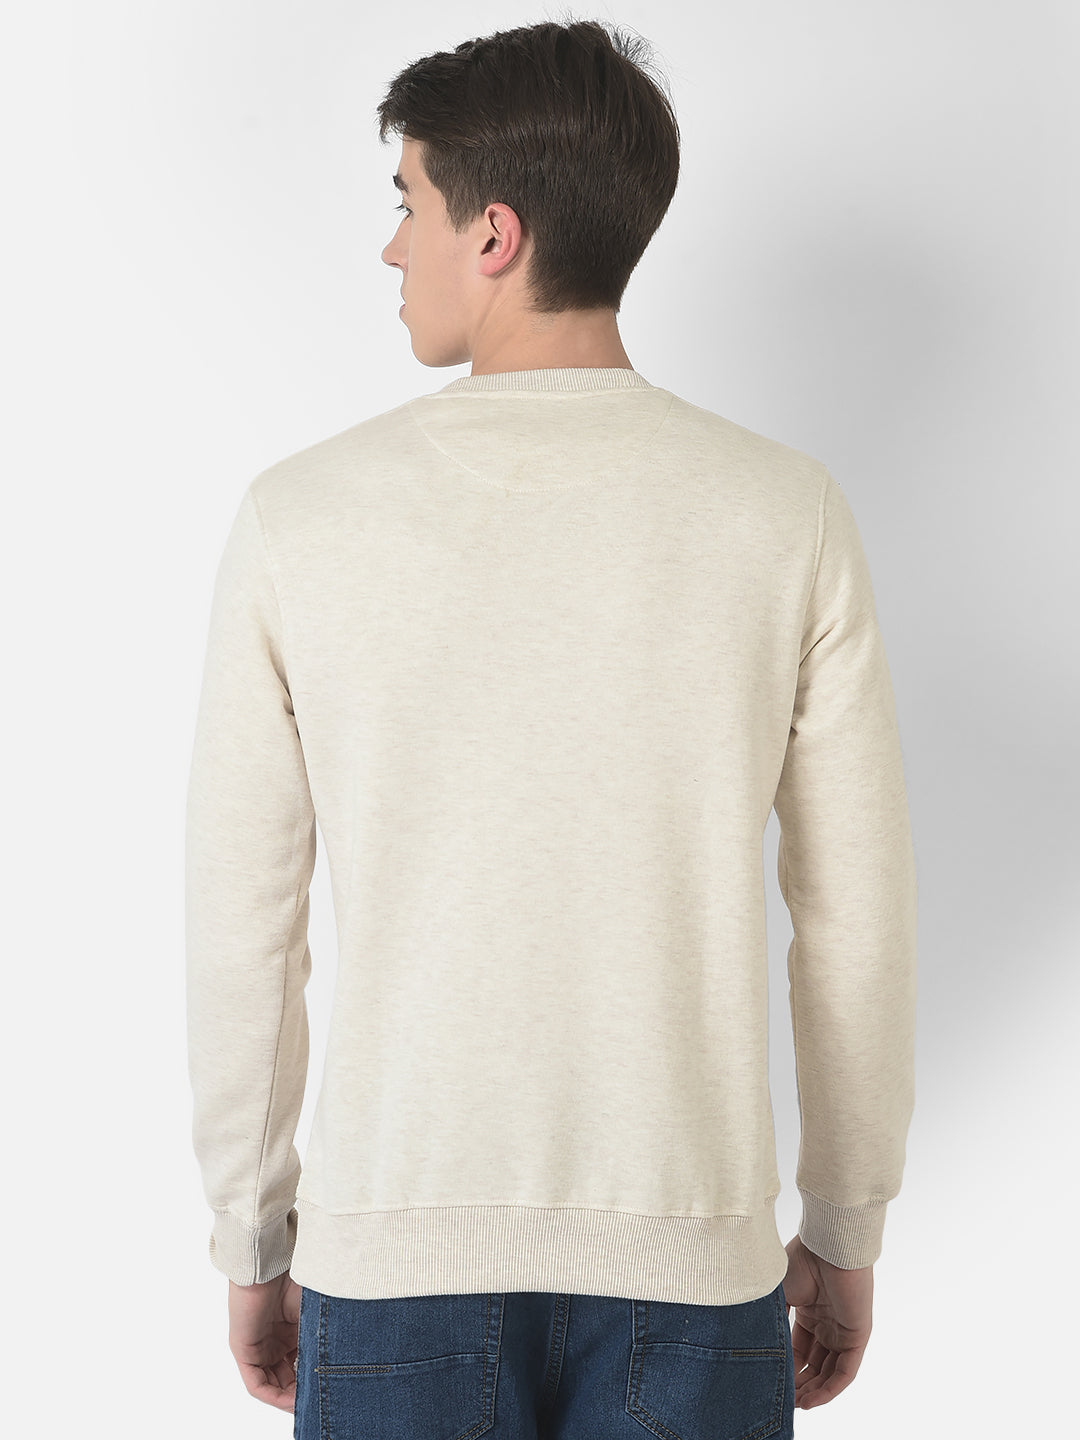 Cobb Off White Printed Round Neck Sweatshirt